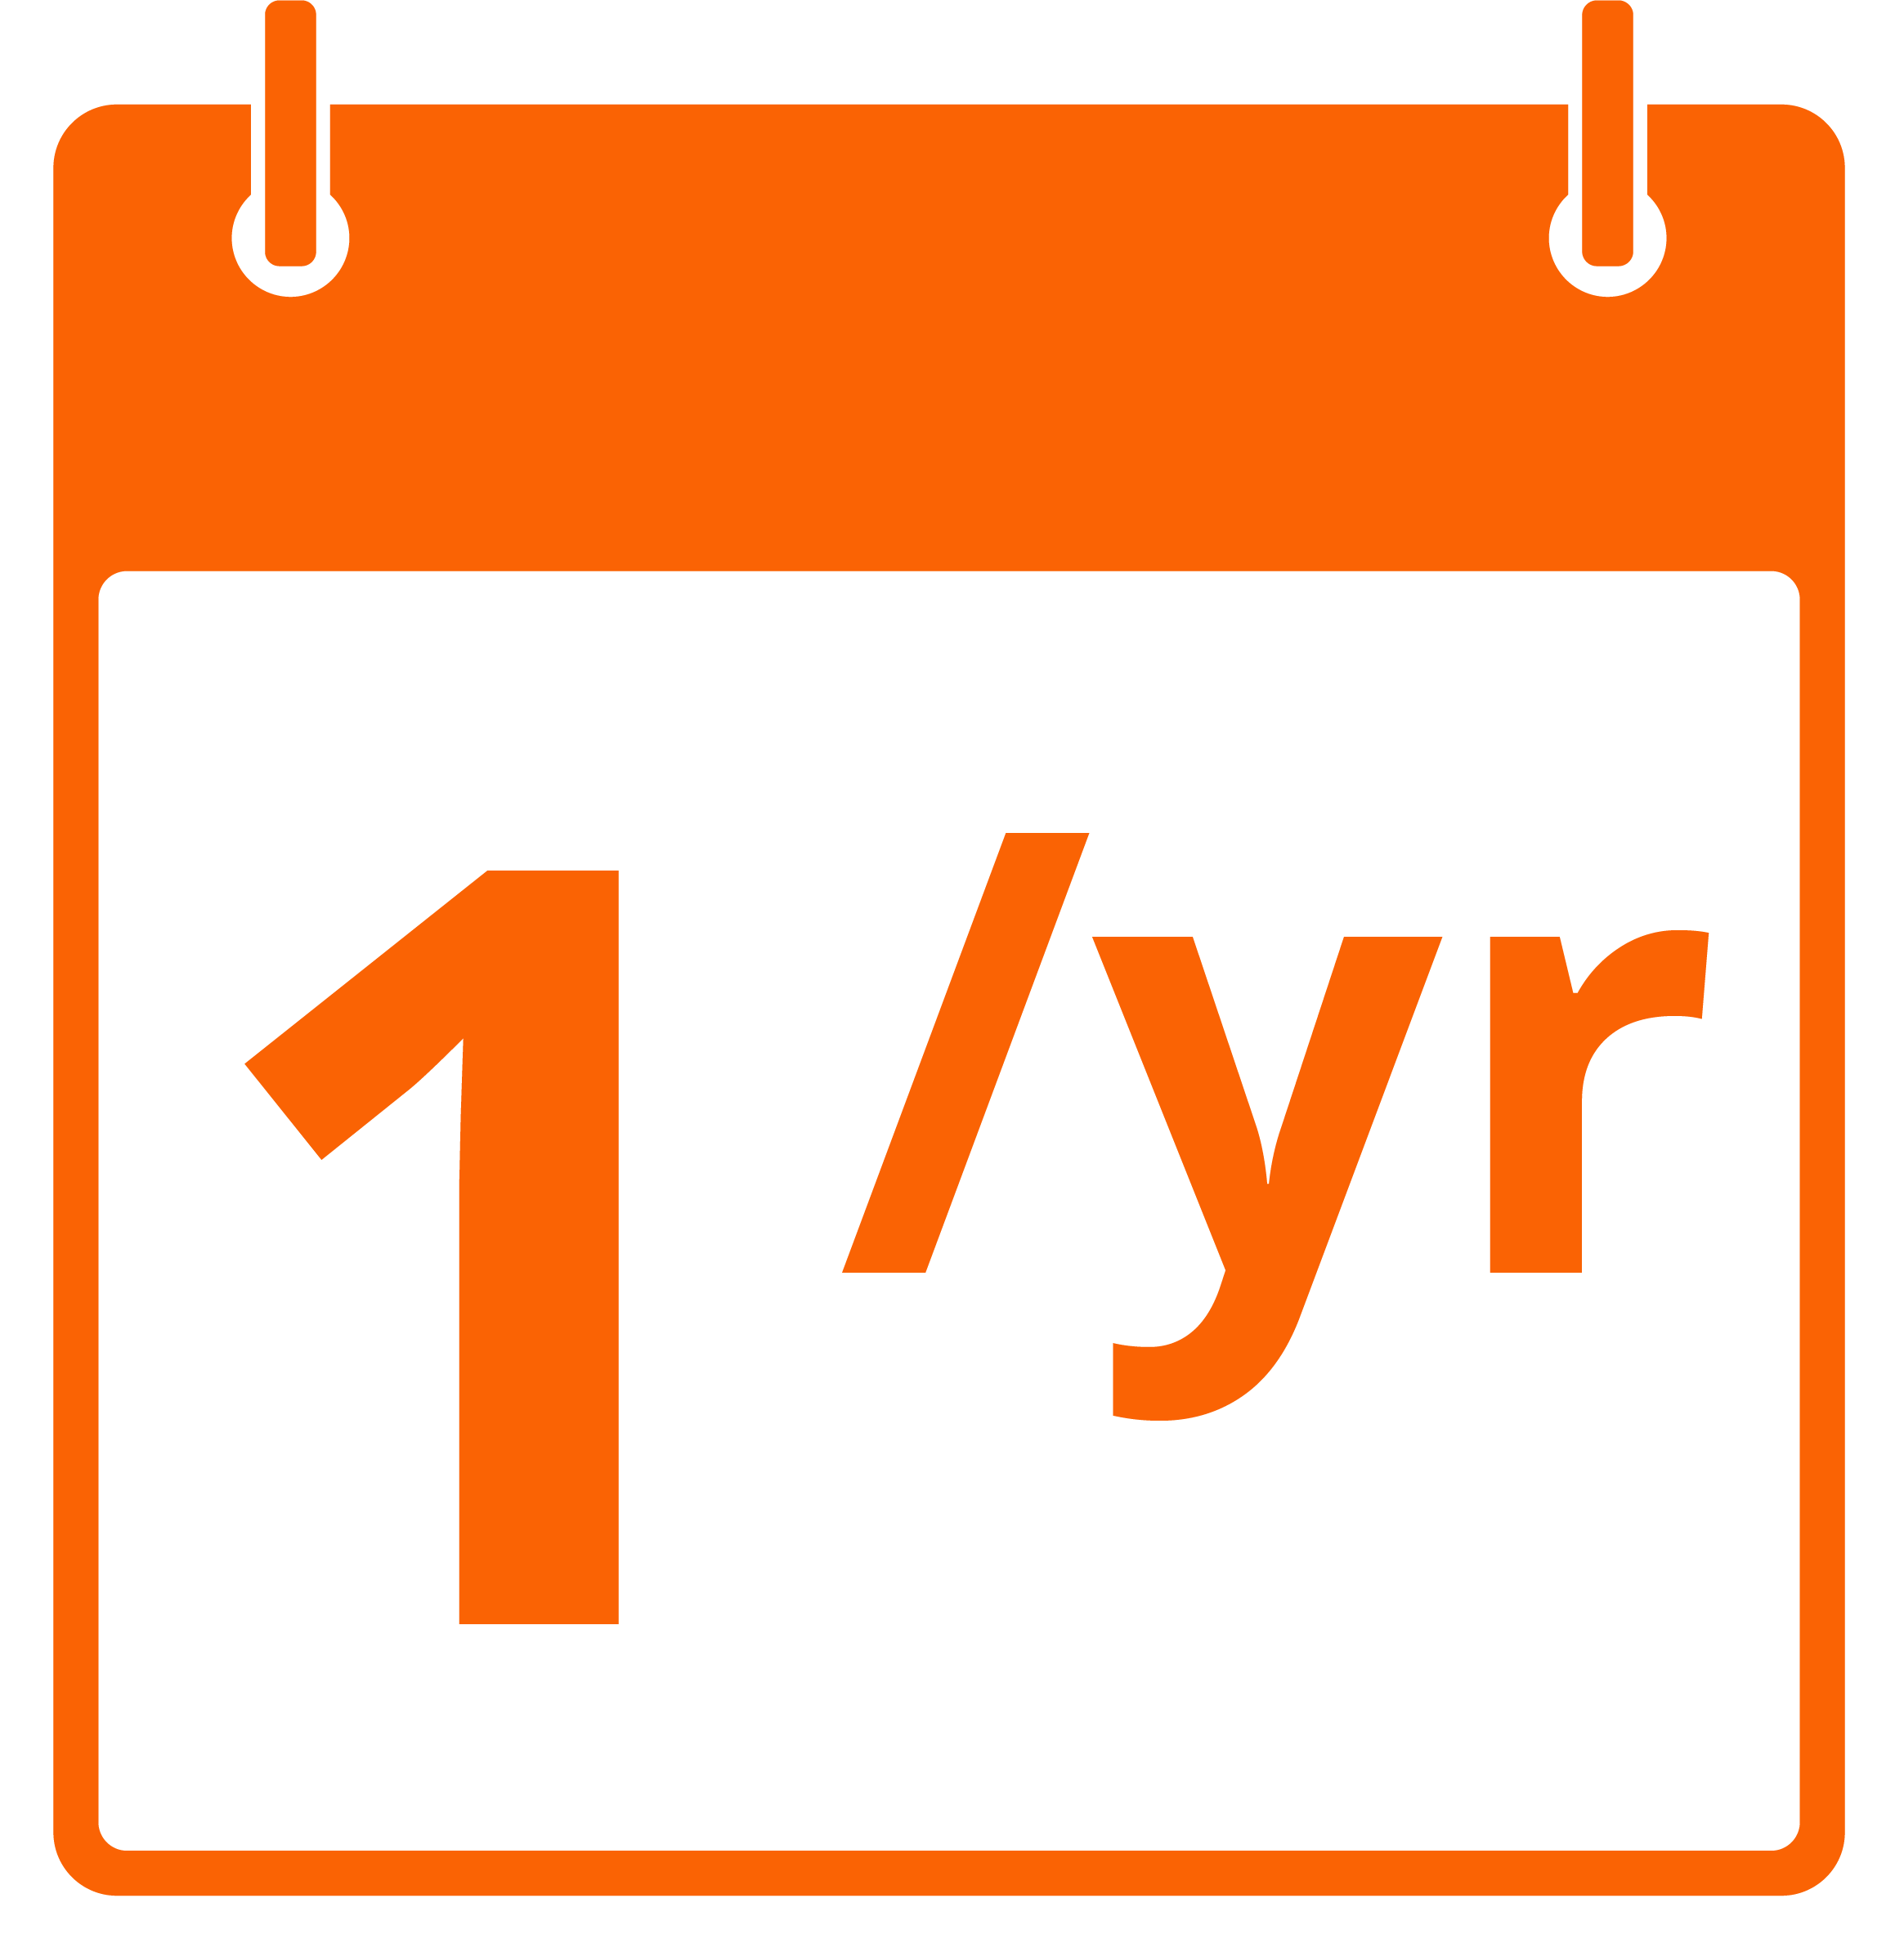 1 app per year icon orange